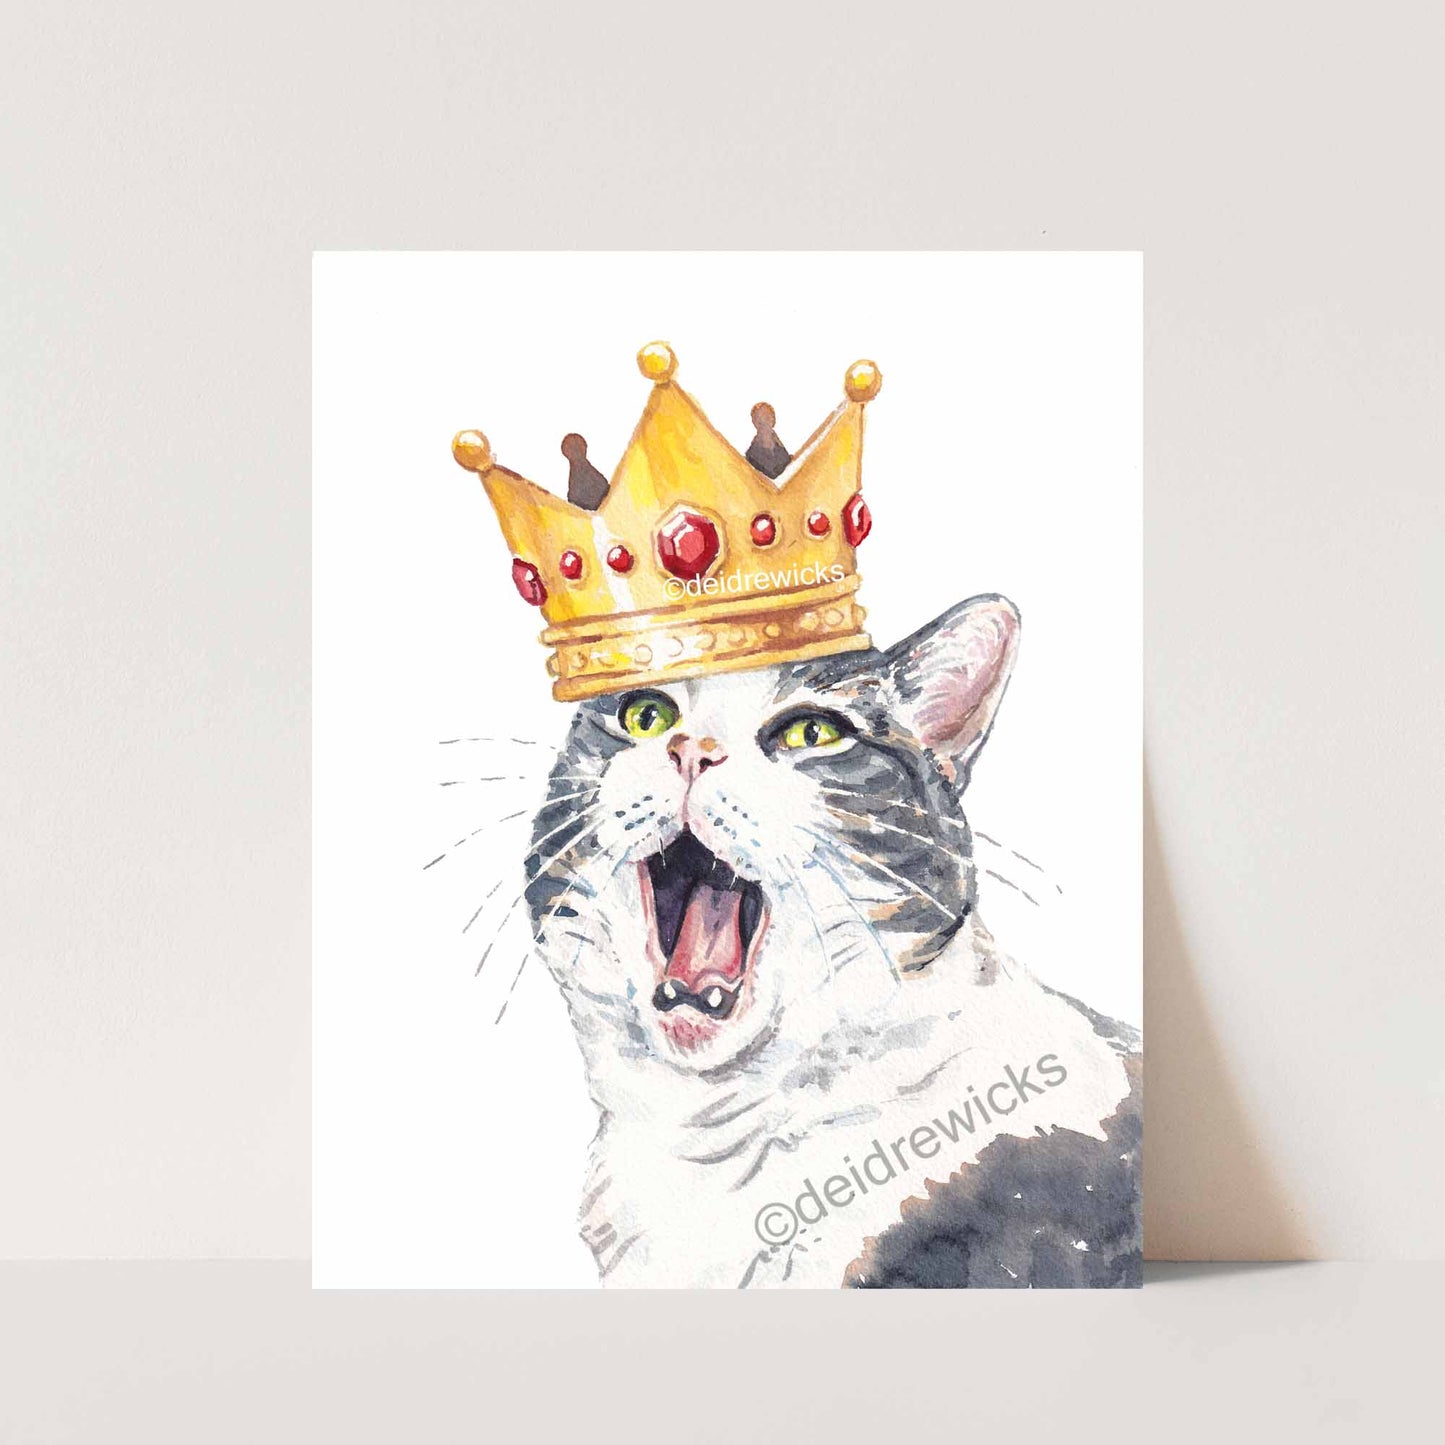 Watercolor print of a grumpy grey tabby cat wearing a royal gold crown. Original art by Deidre Wicks